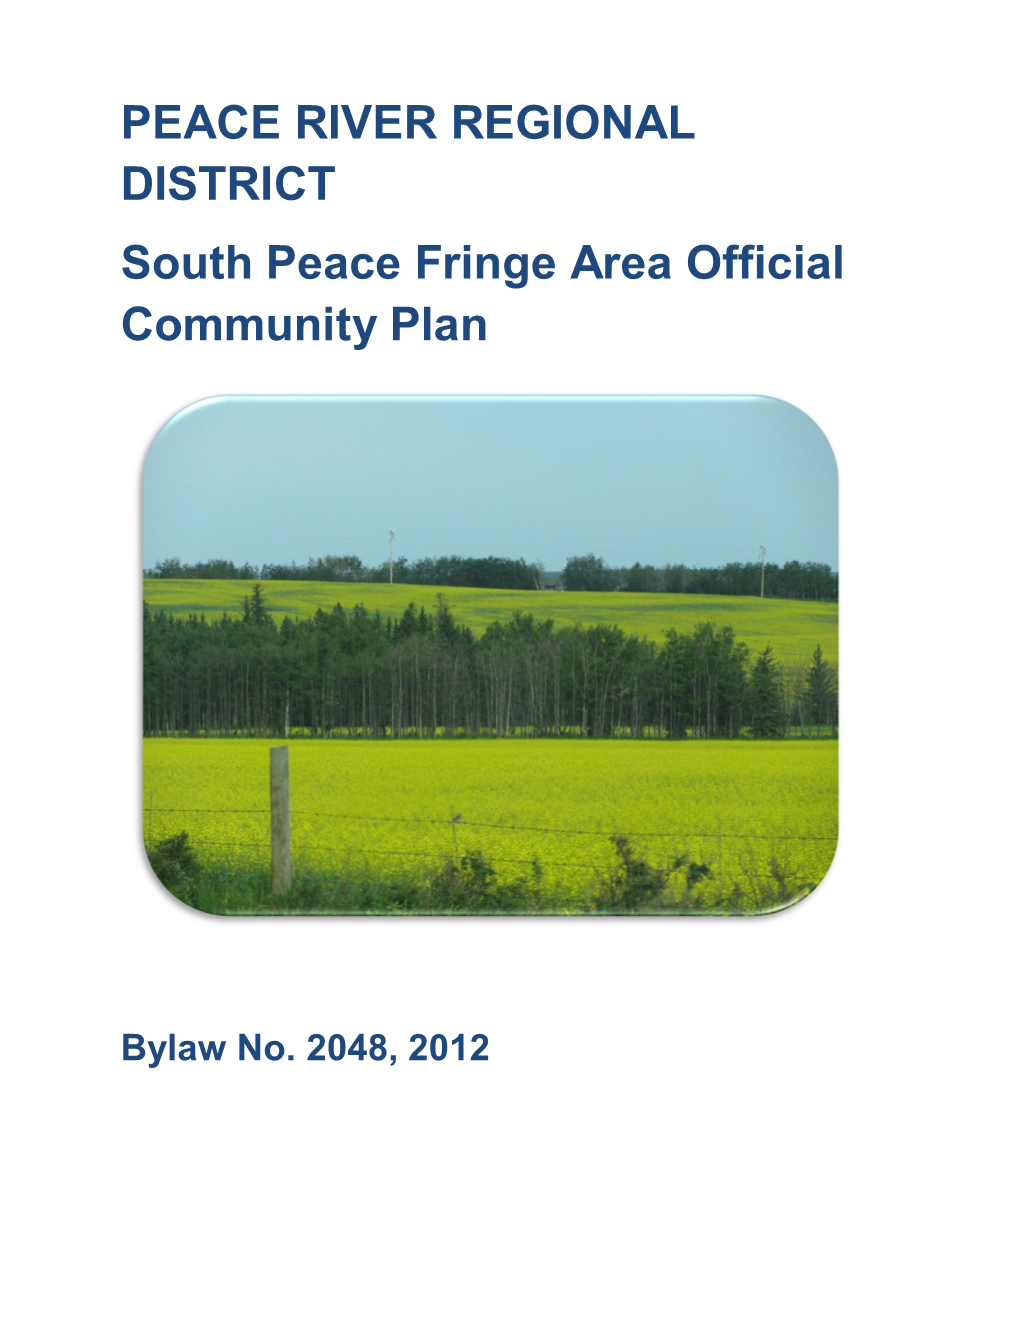 PEACE RIVER REGIONAL DISTRICT South Peace Fringe Area Official Community Plan